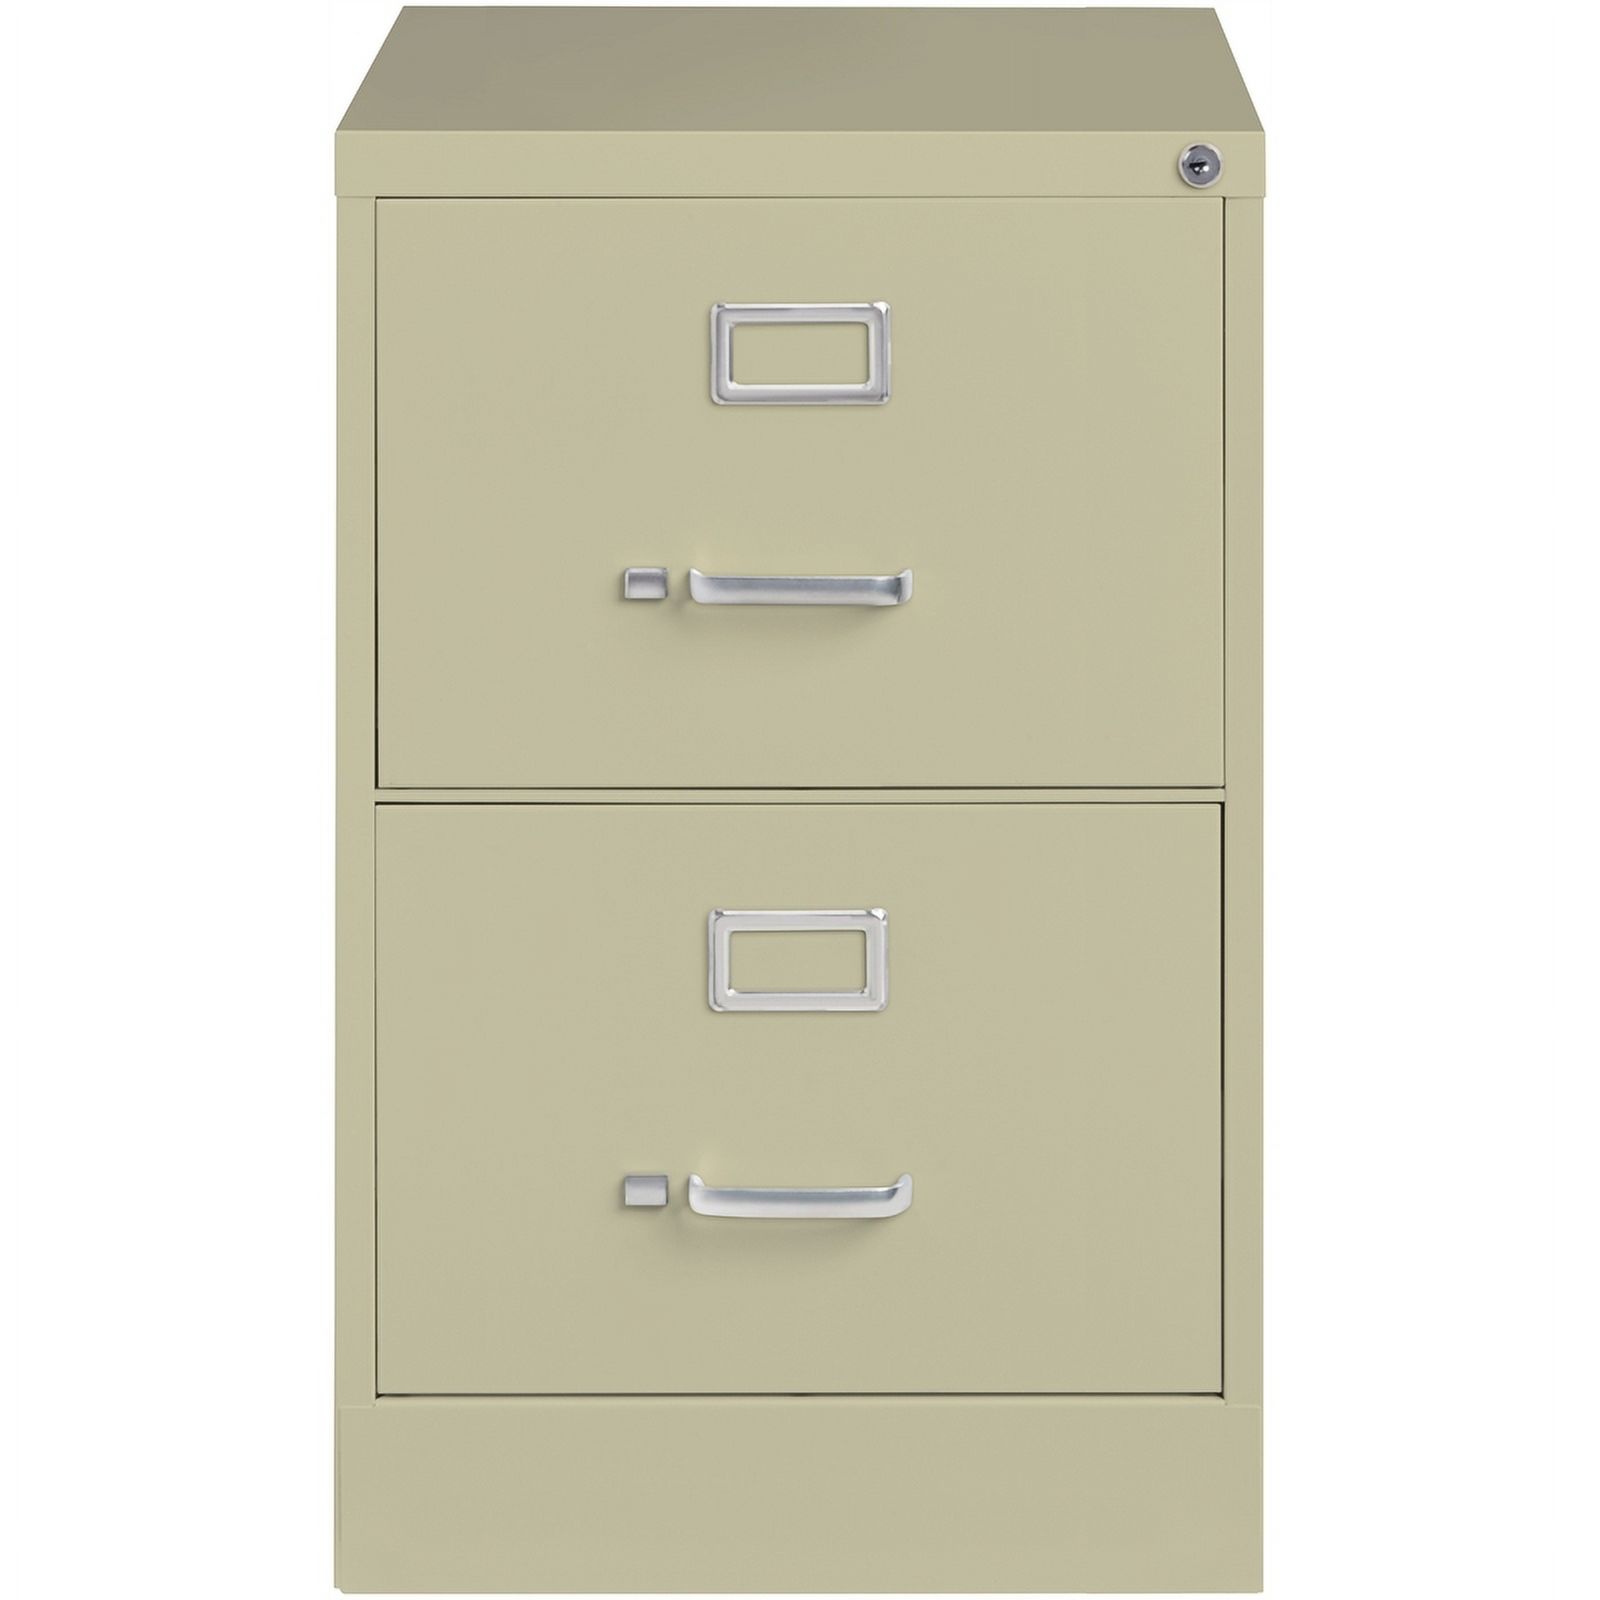 Scranton & Co 26.5" 2-Drawer Metal Legal Width Vertical File Cabinet in Beige - image 2 of 5